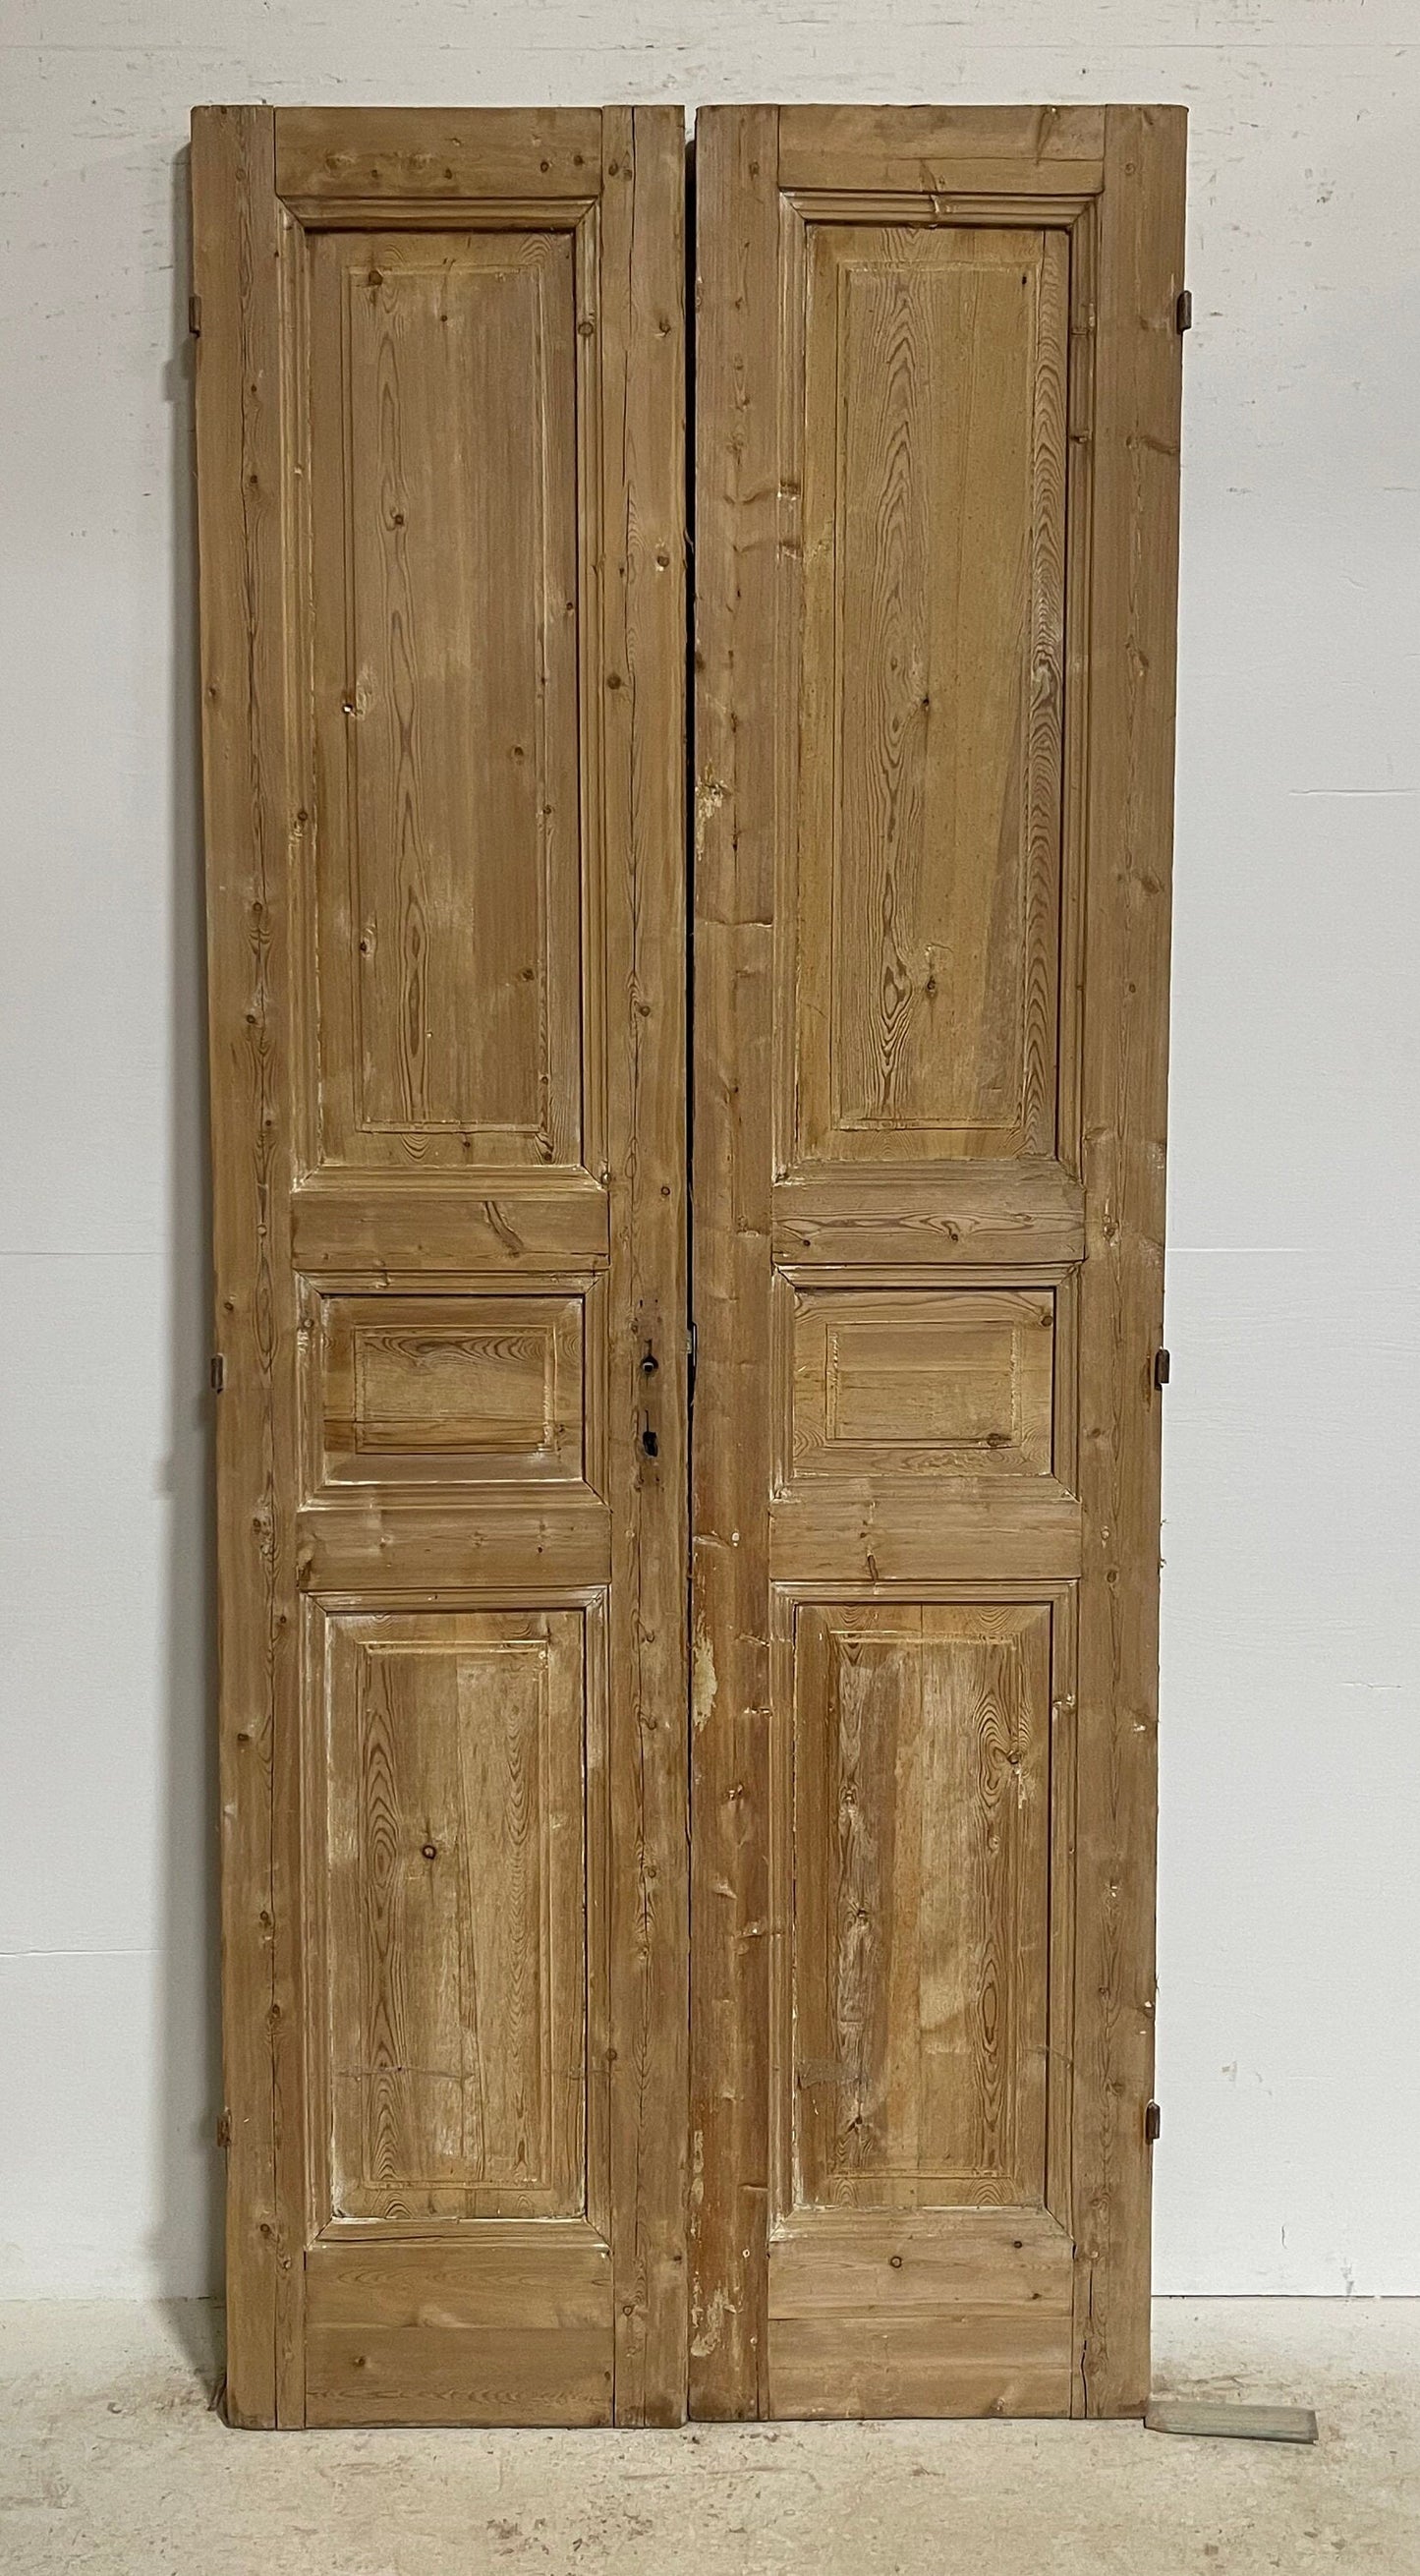 Antique French panel doors (93.25x38.25) G0092s